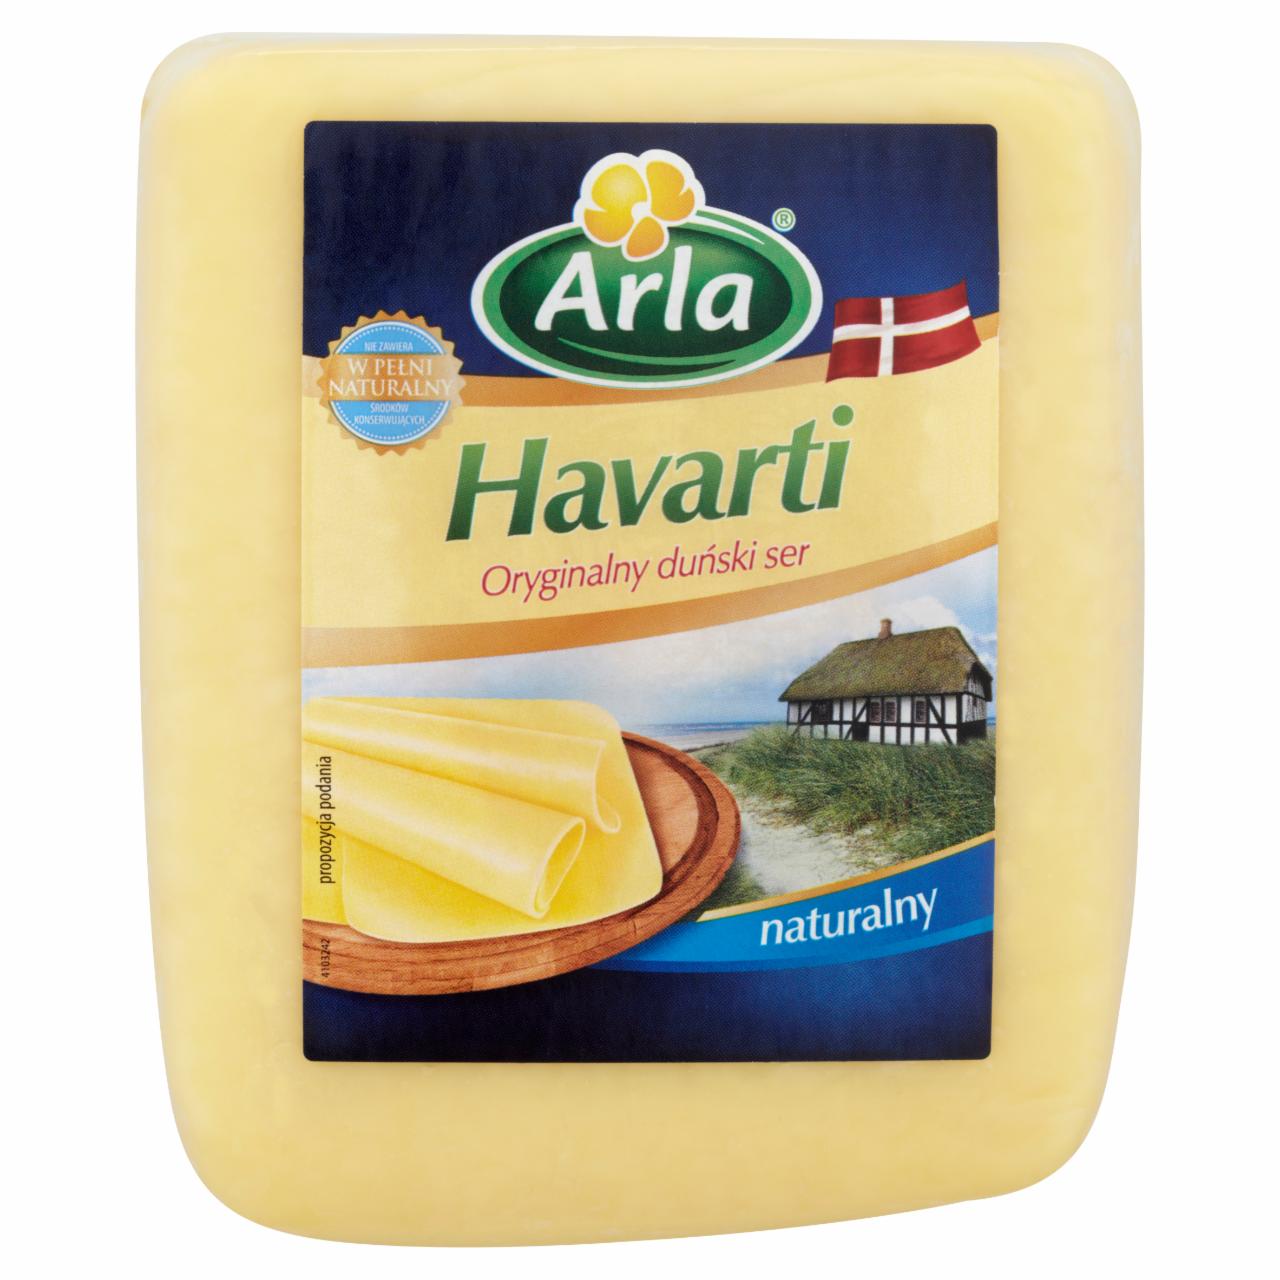 Photo - Arla Havarti Natural Original Danish Cheese